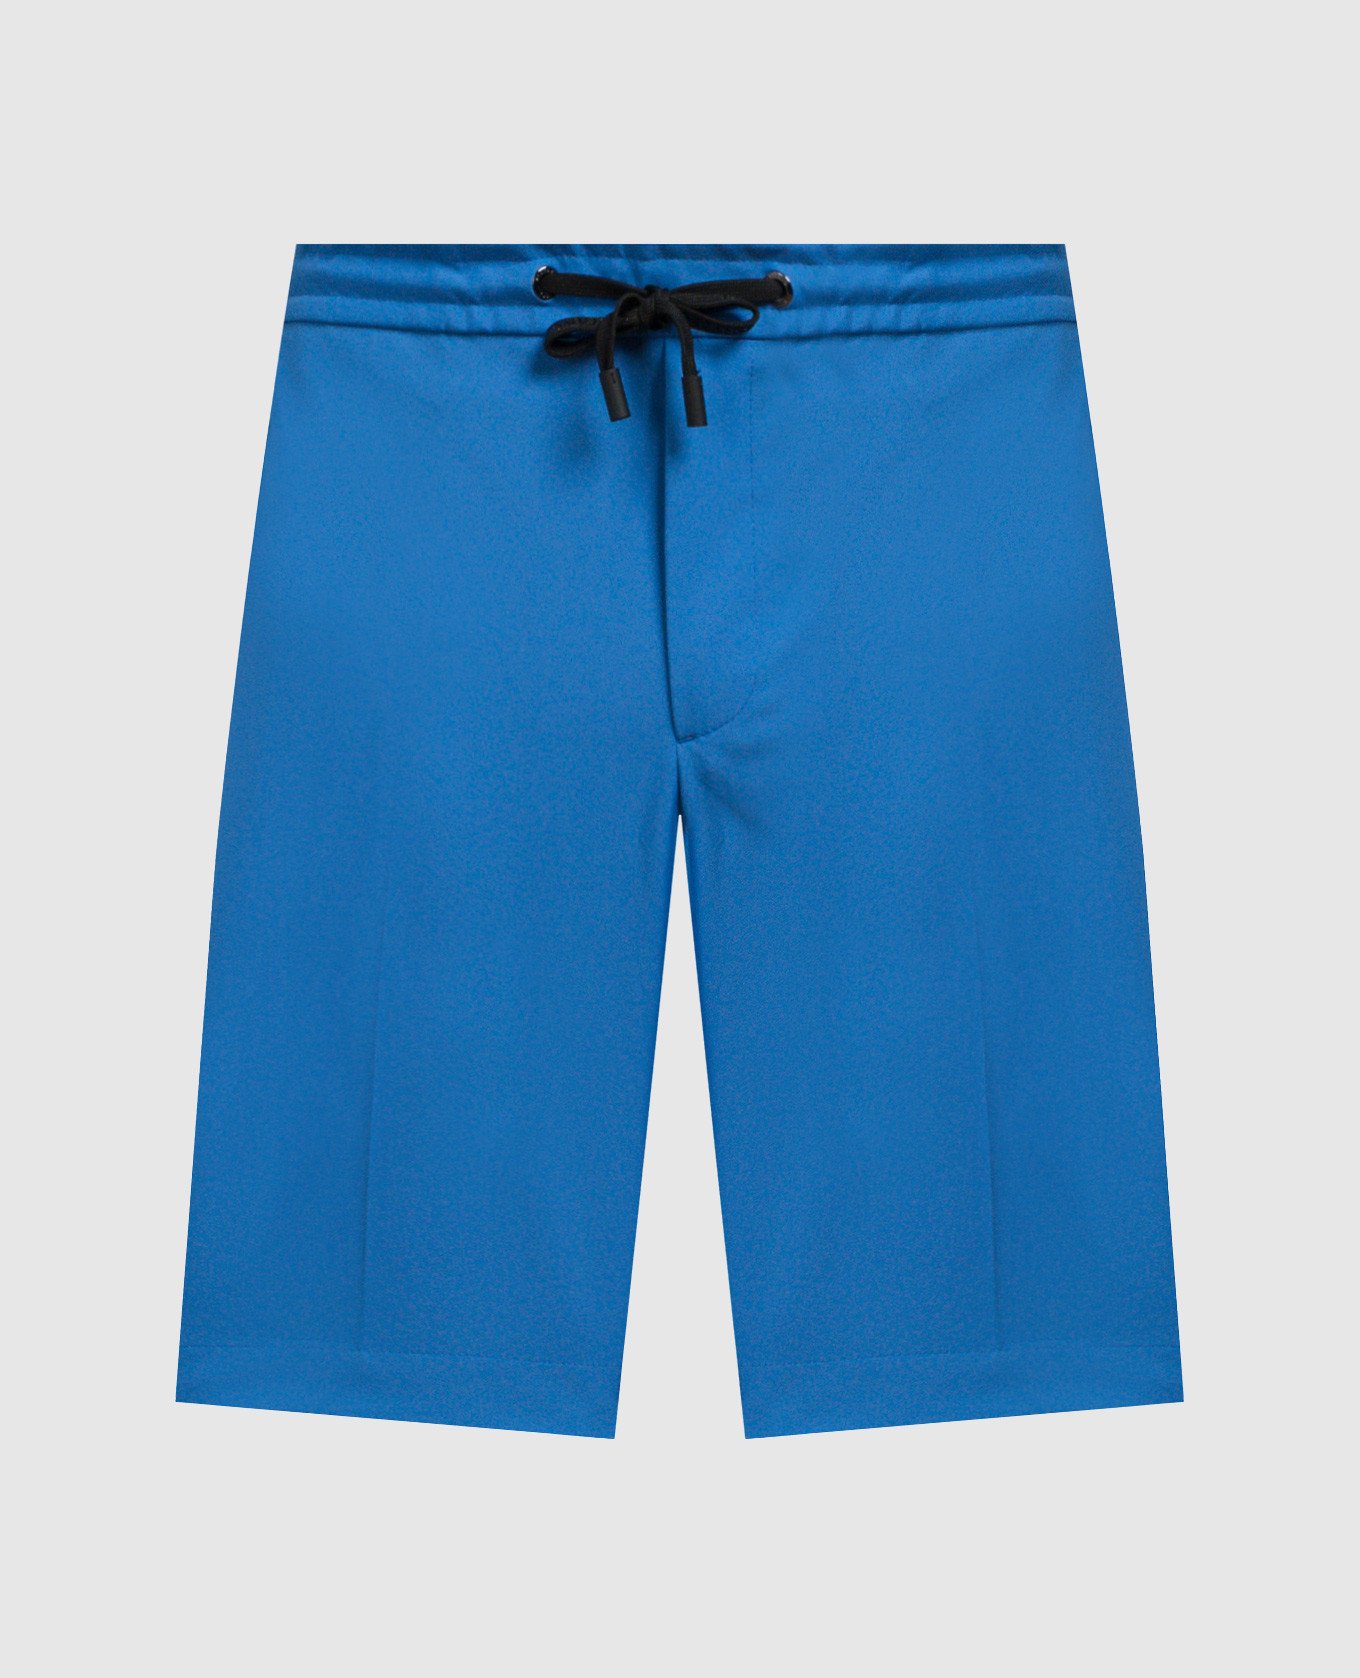 Blue shorts with logo